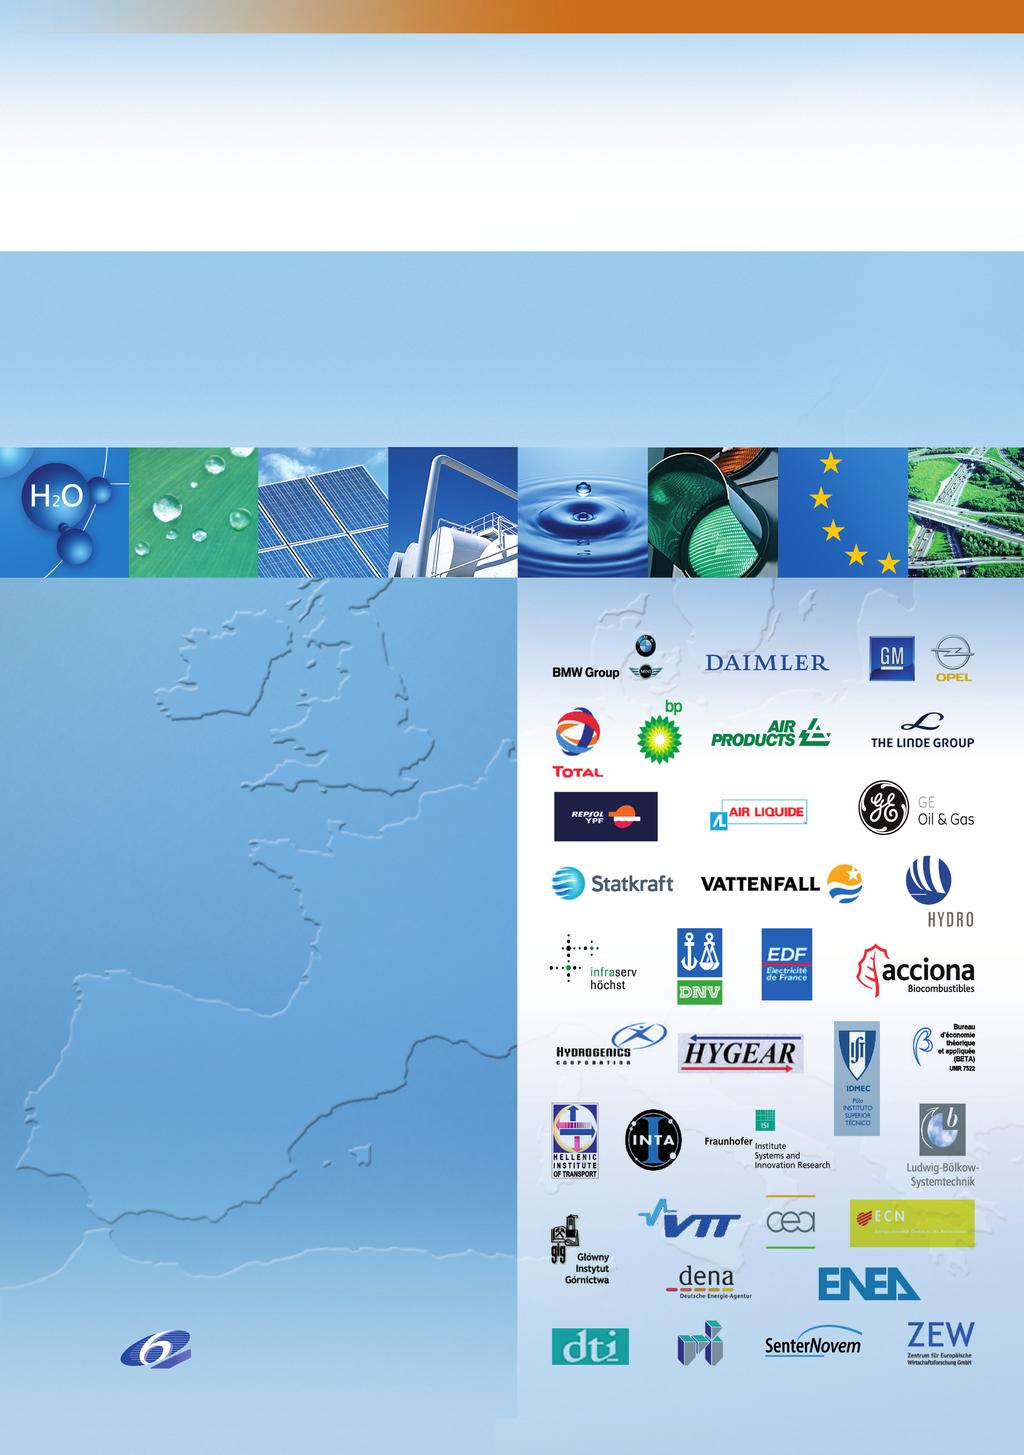 HyWays Hydrogen Energy in Europe Project Coordinates EC Contract N : SES6 502596 Project Website: http://www.hyways.